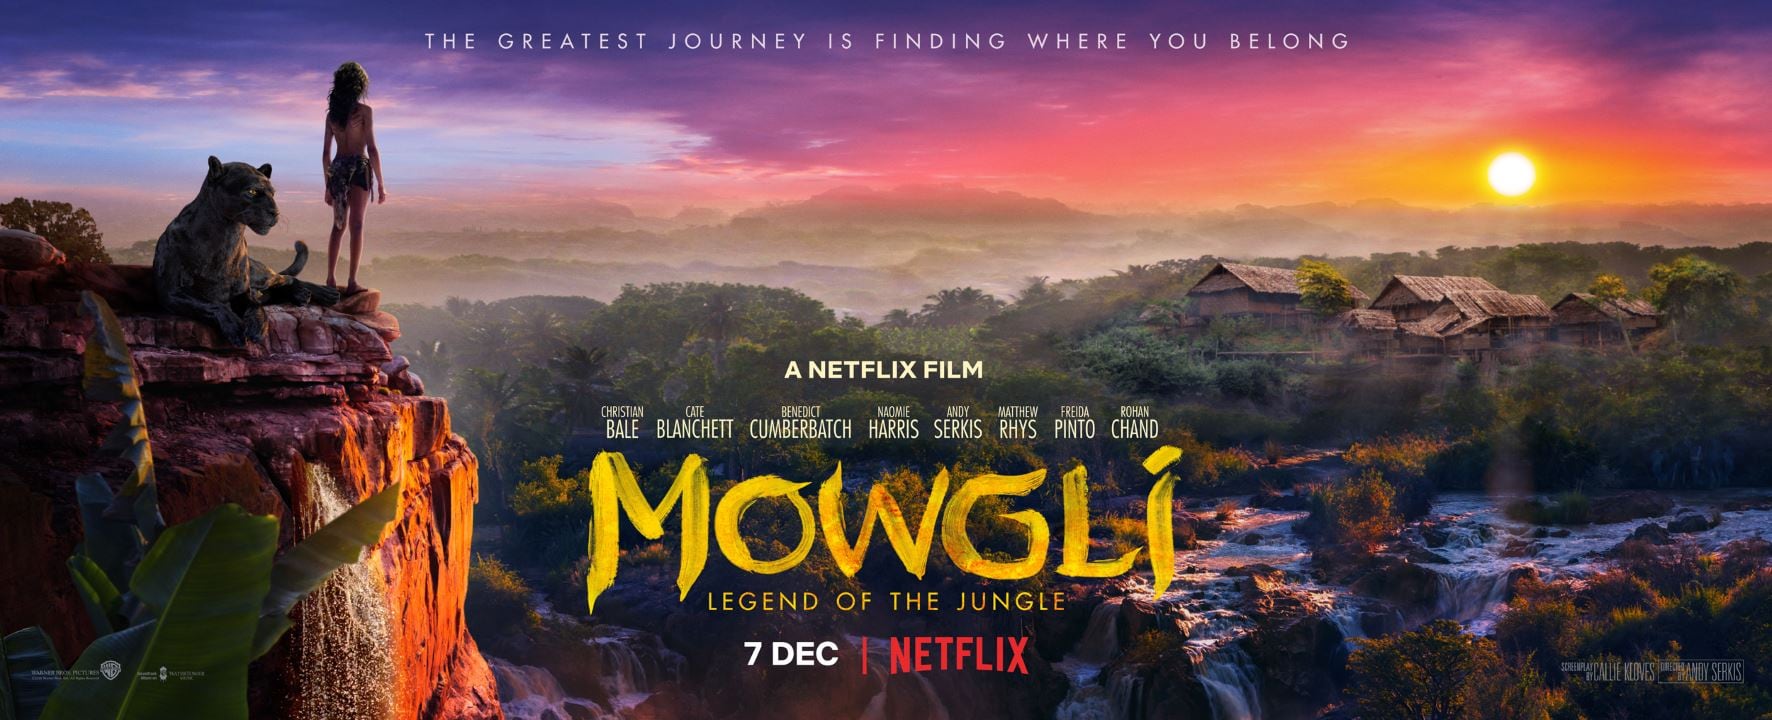 Xem Phim Mowgli: Huyền thoại rừng xanh, Mowgli: Legend of the Jungle 2018